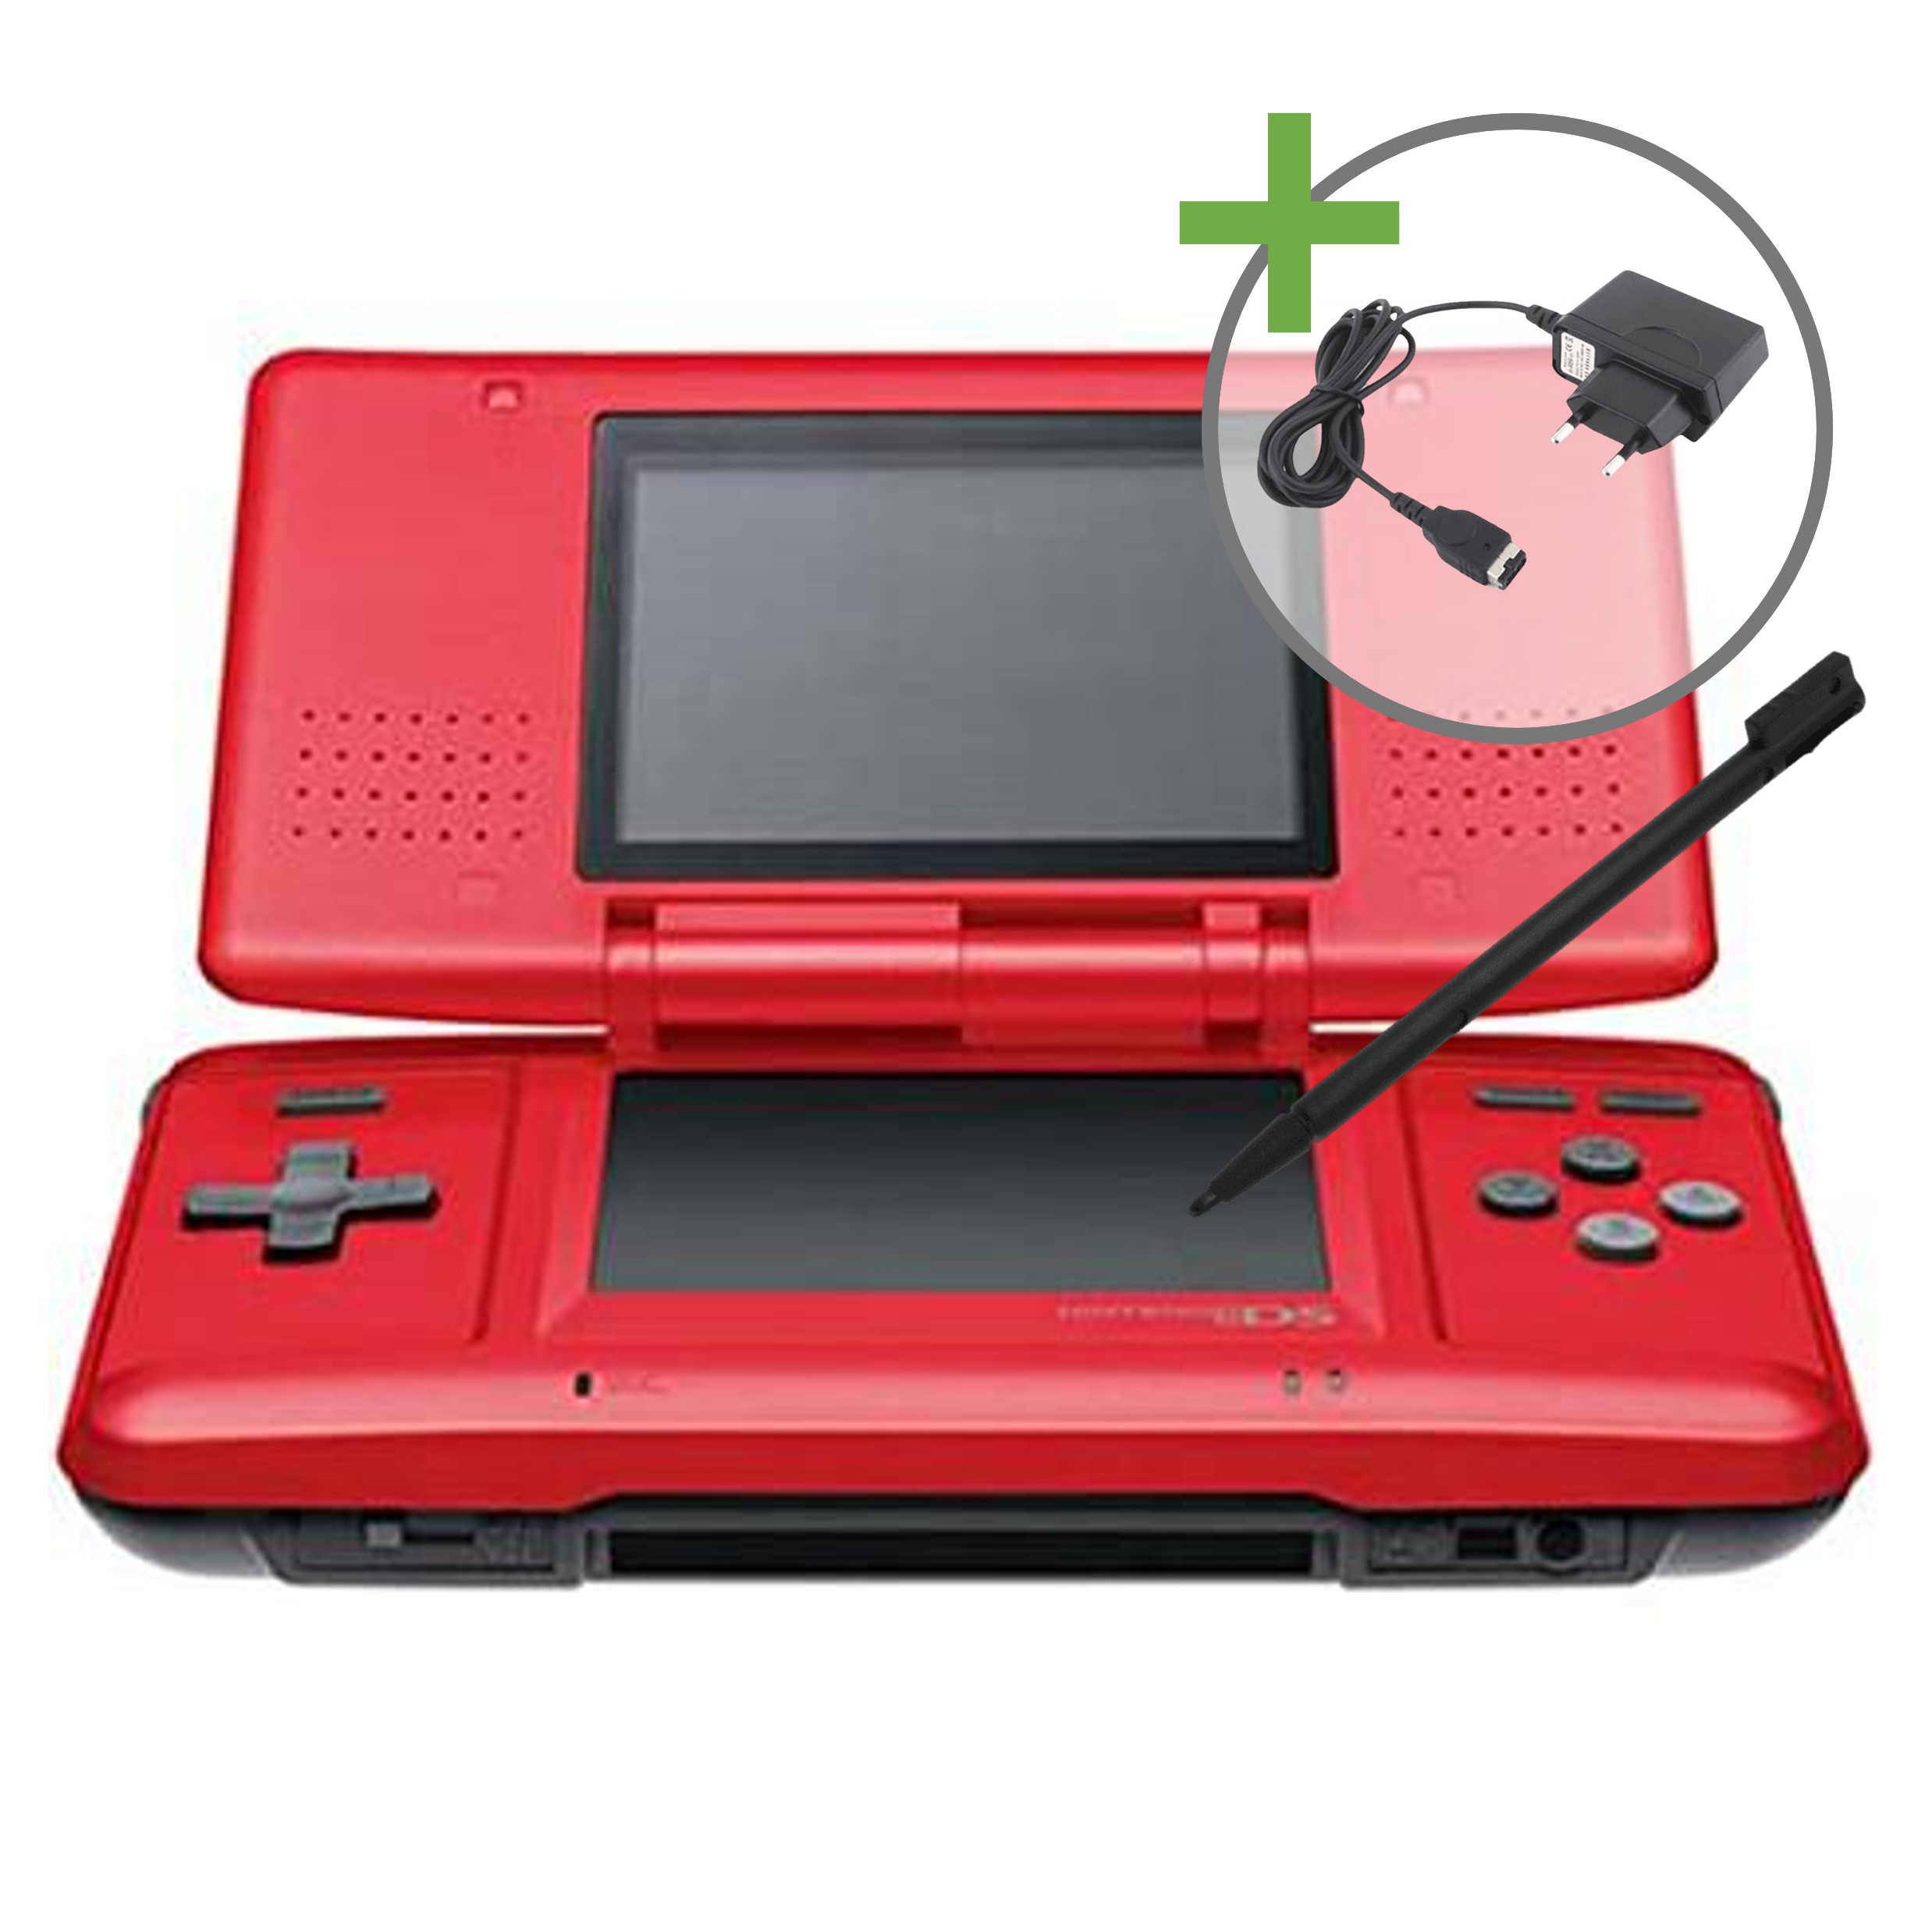 Nintendo DS Original - Red - Nintendo DS Hardware